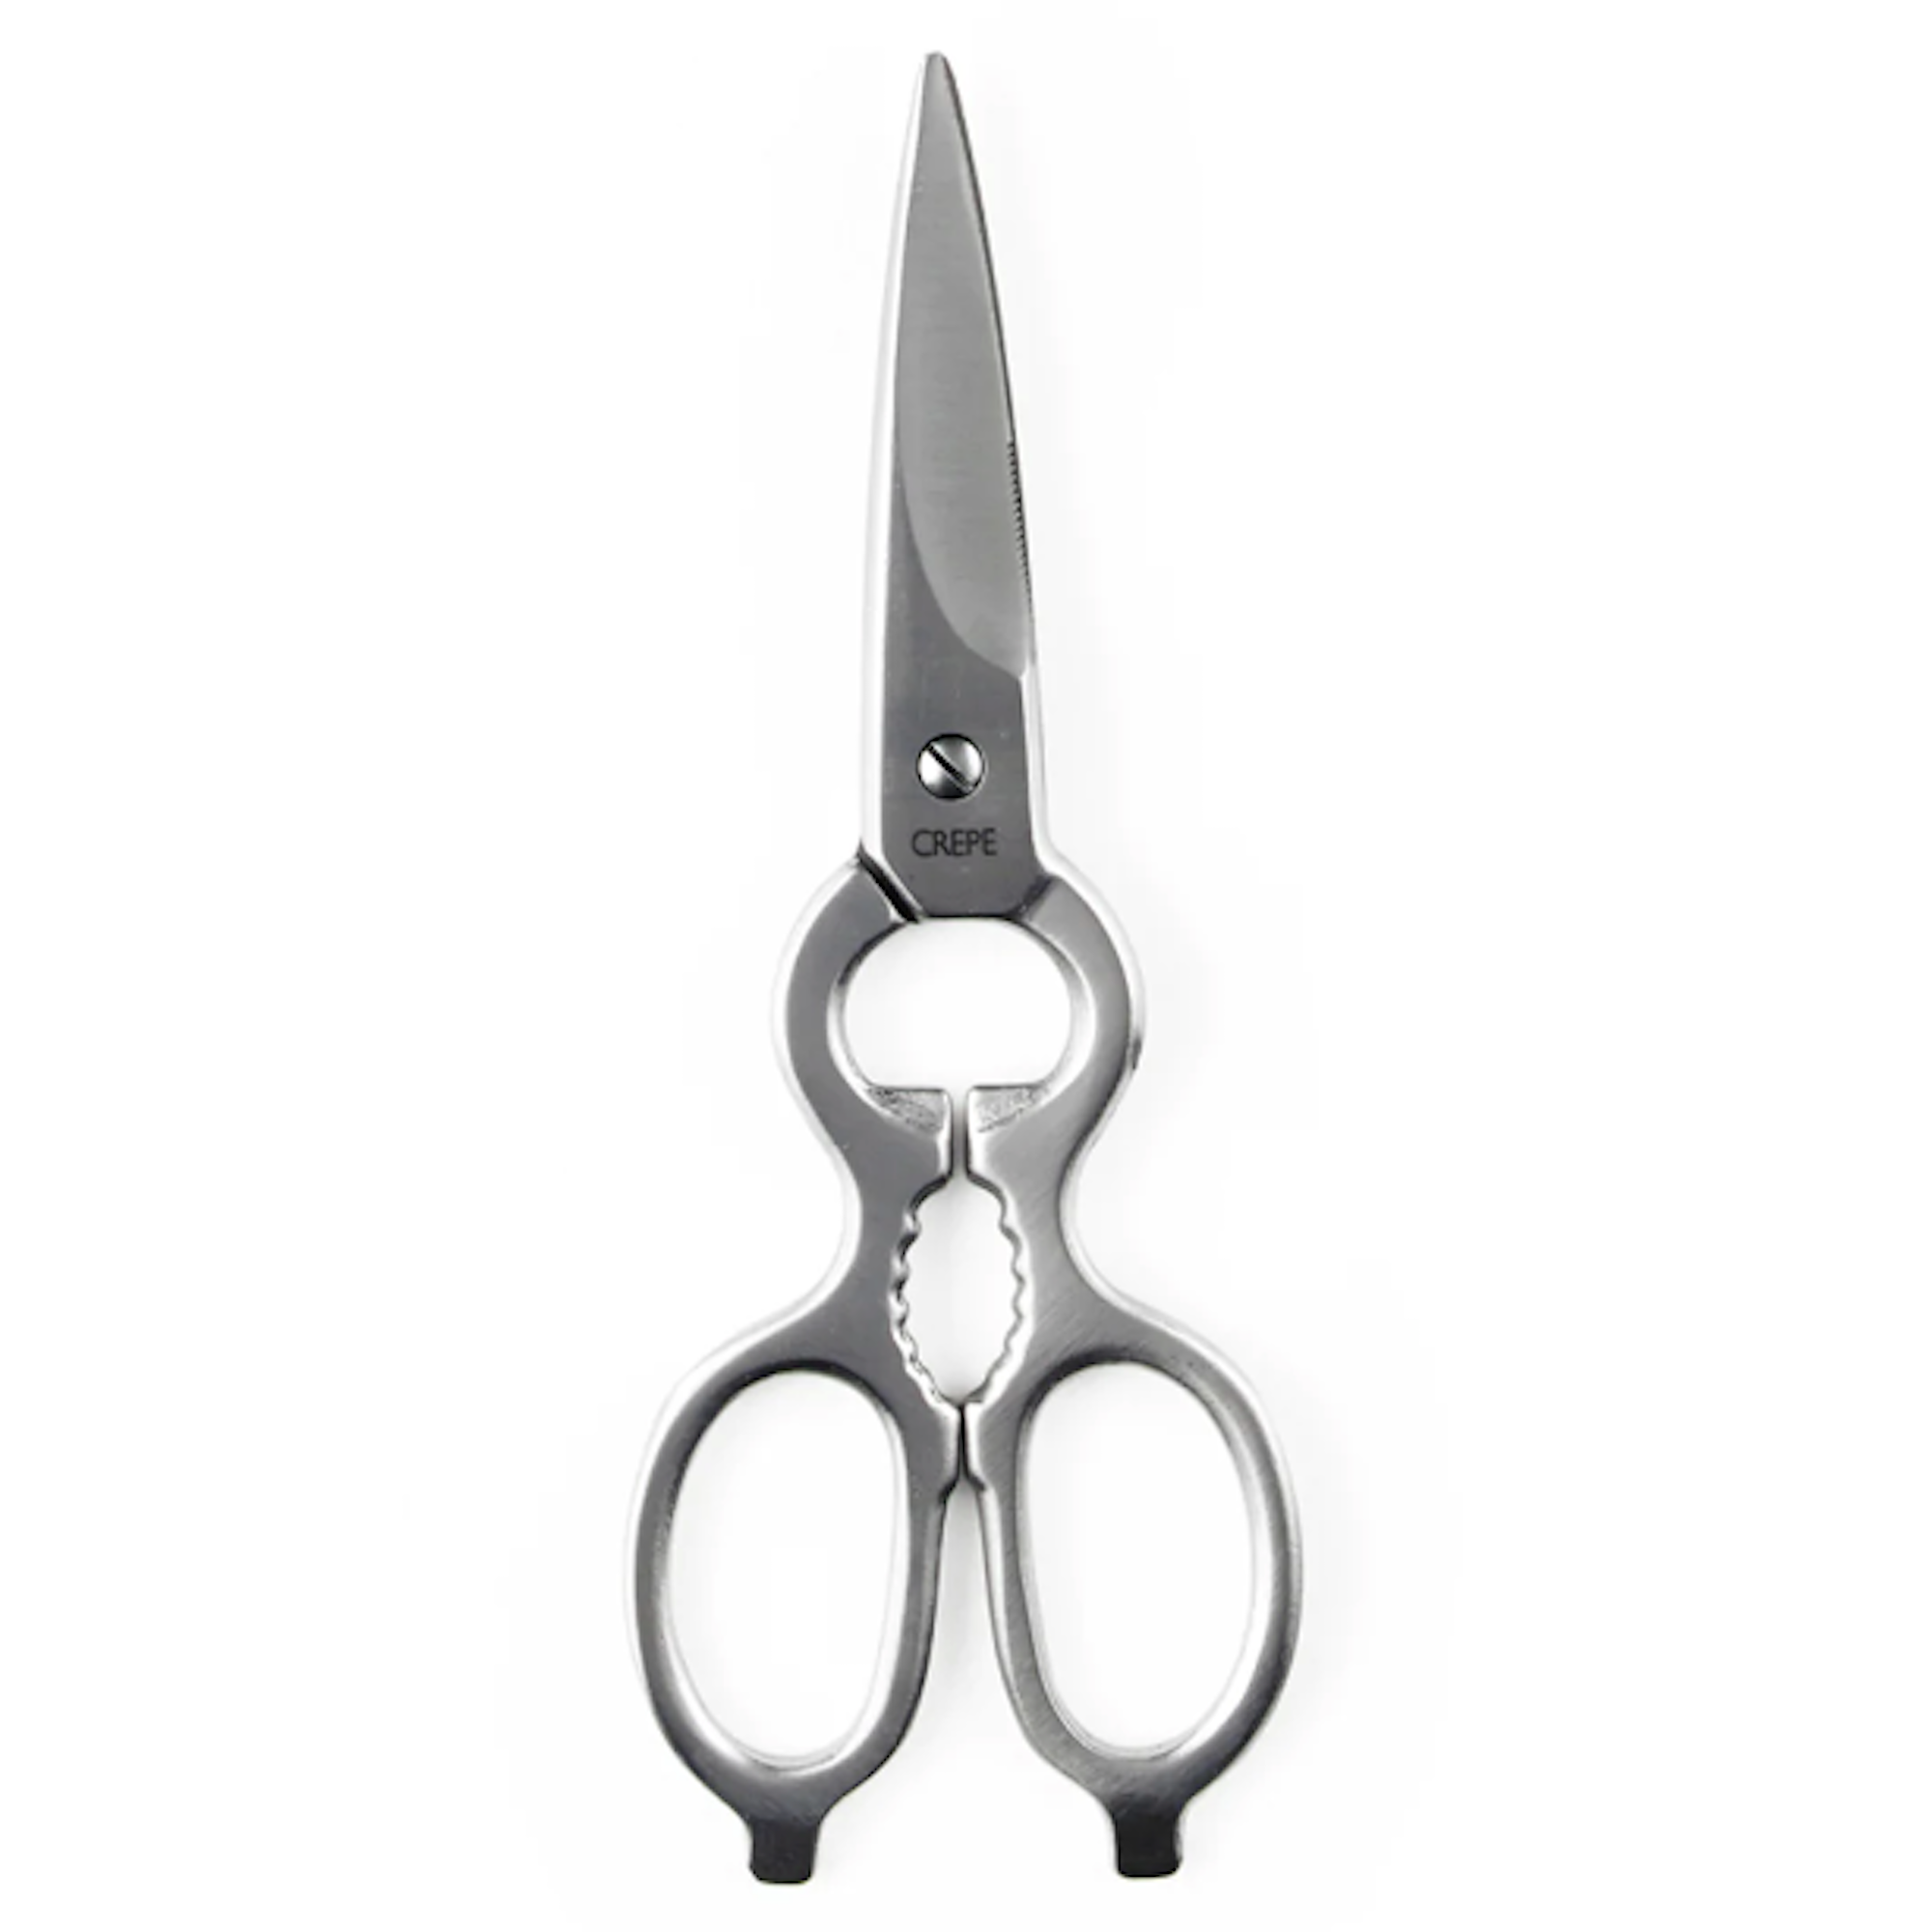 Beloved blades: Banshu Hamono scissorsmiths - The Japan Times